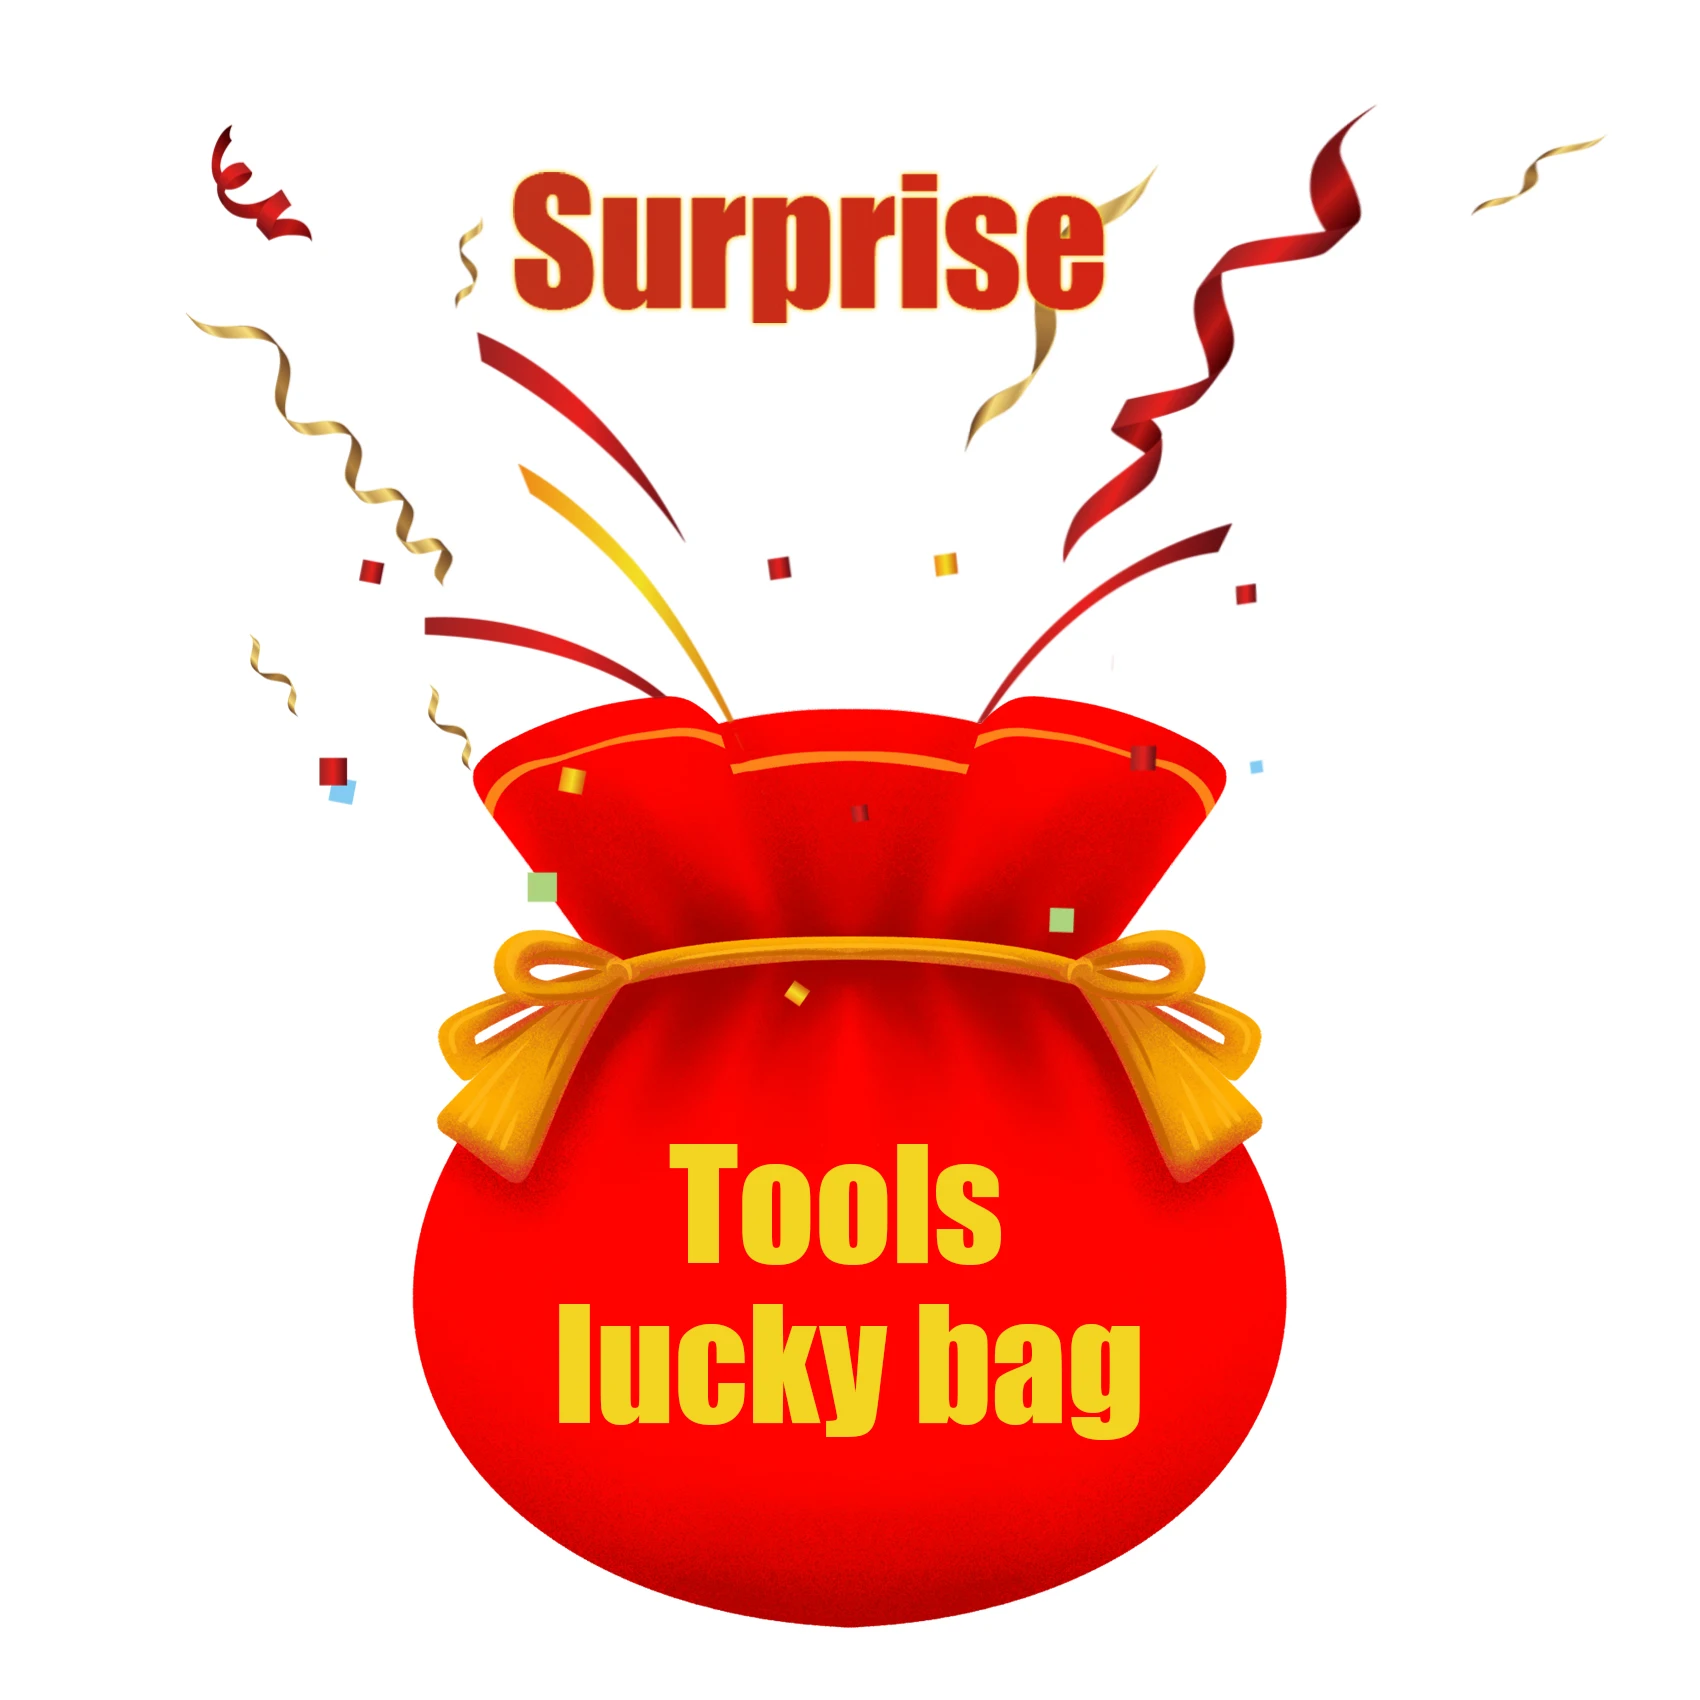 

Lucky Bag Hardware Tools (Paint Brush, Hardware Bits, Sandpaper, More) Mystery Box Random Sent